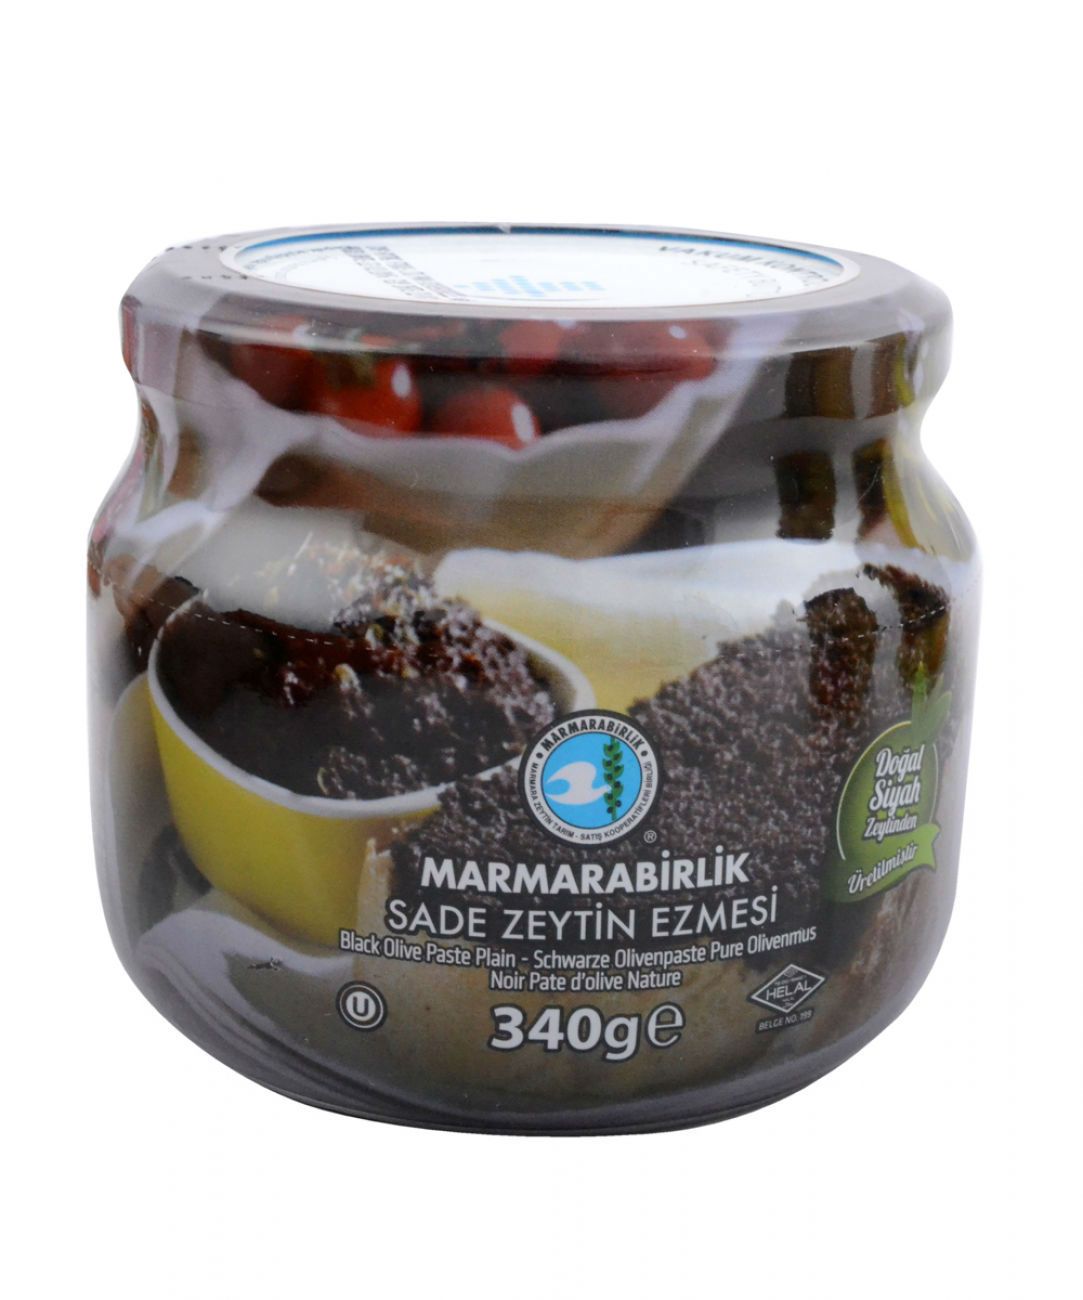 Marmara Birlik Black Olive Paste Plain Jar (340G) - Aytac Foods